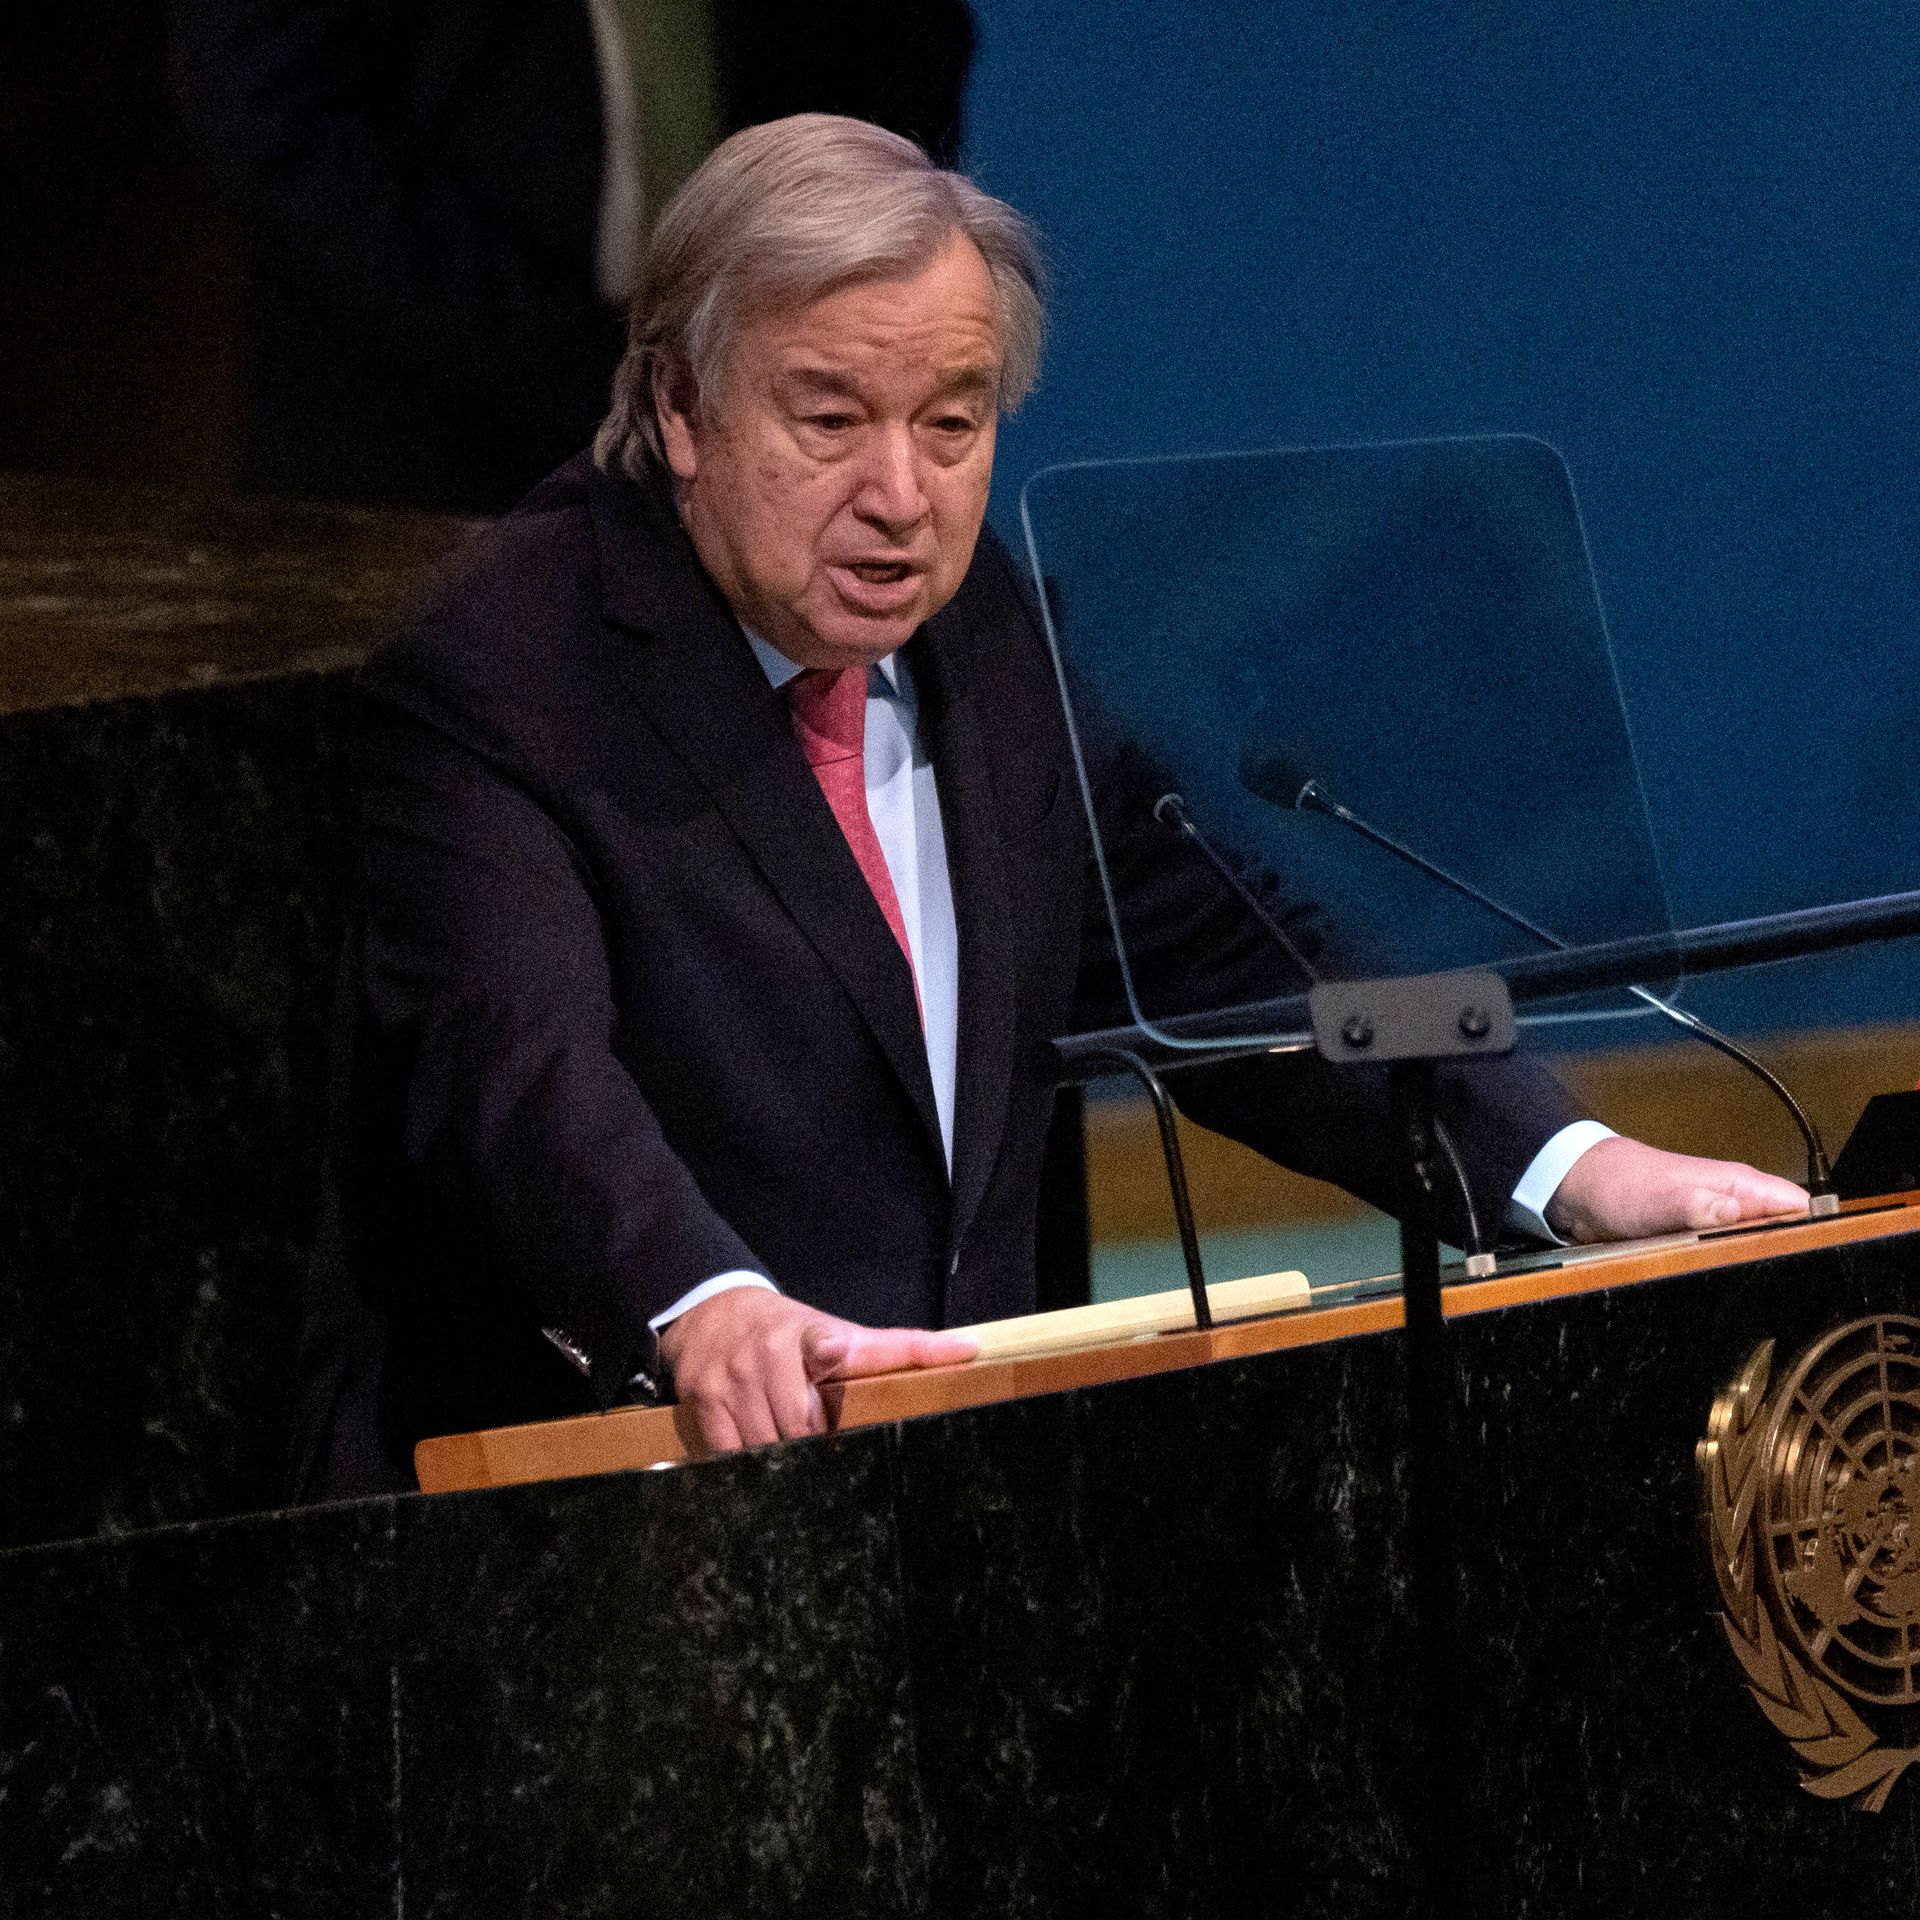 United Nations Secretary-General Antonio Guterres